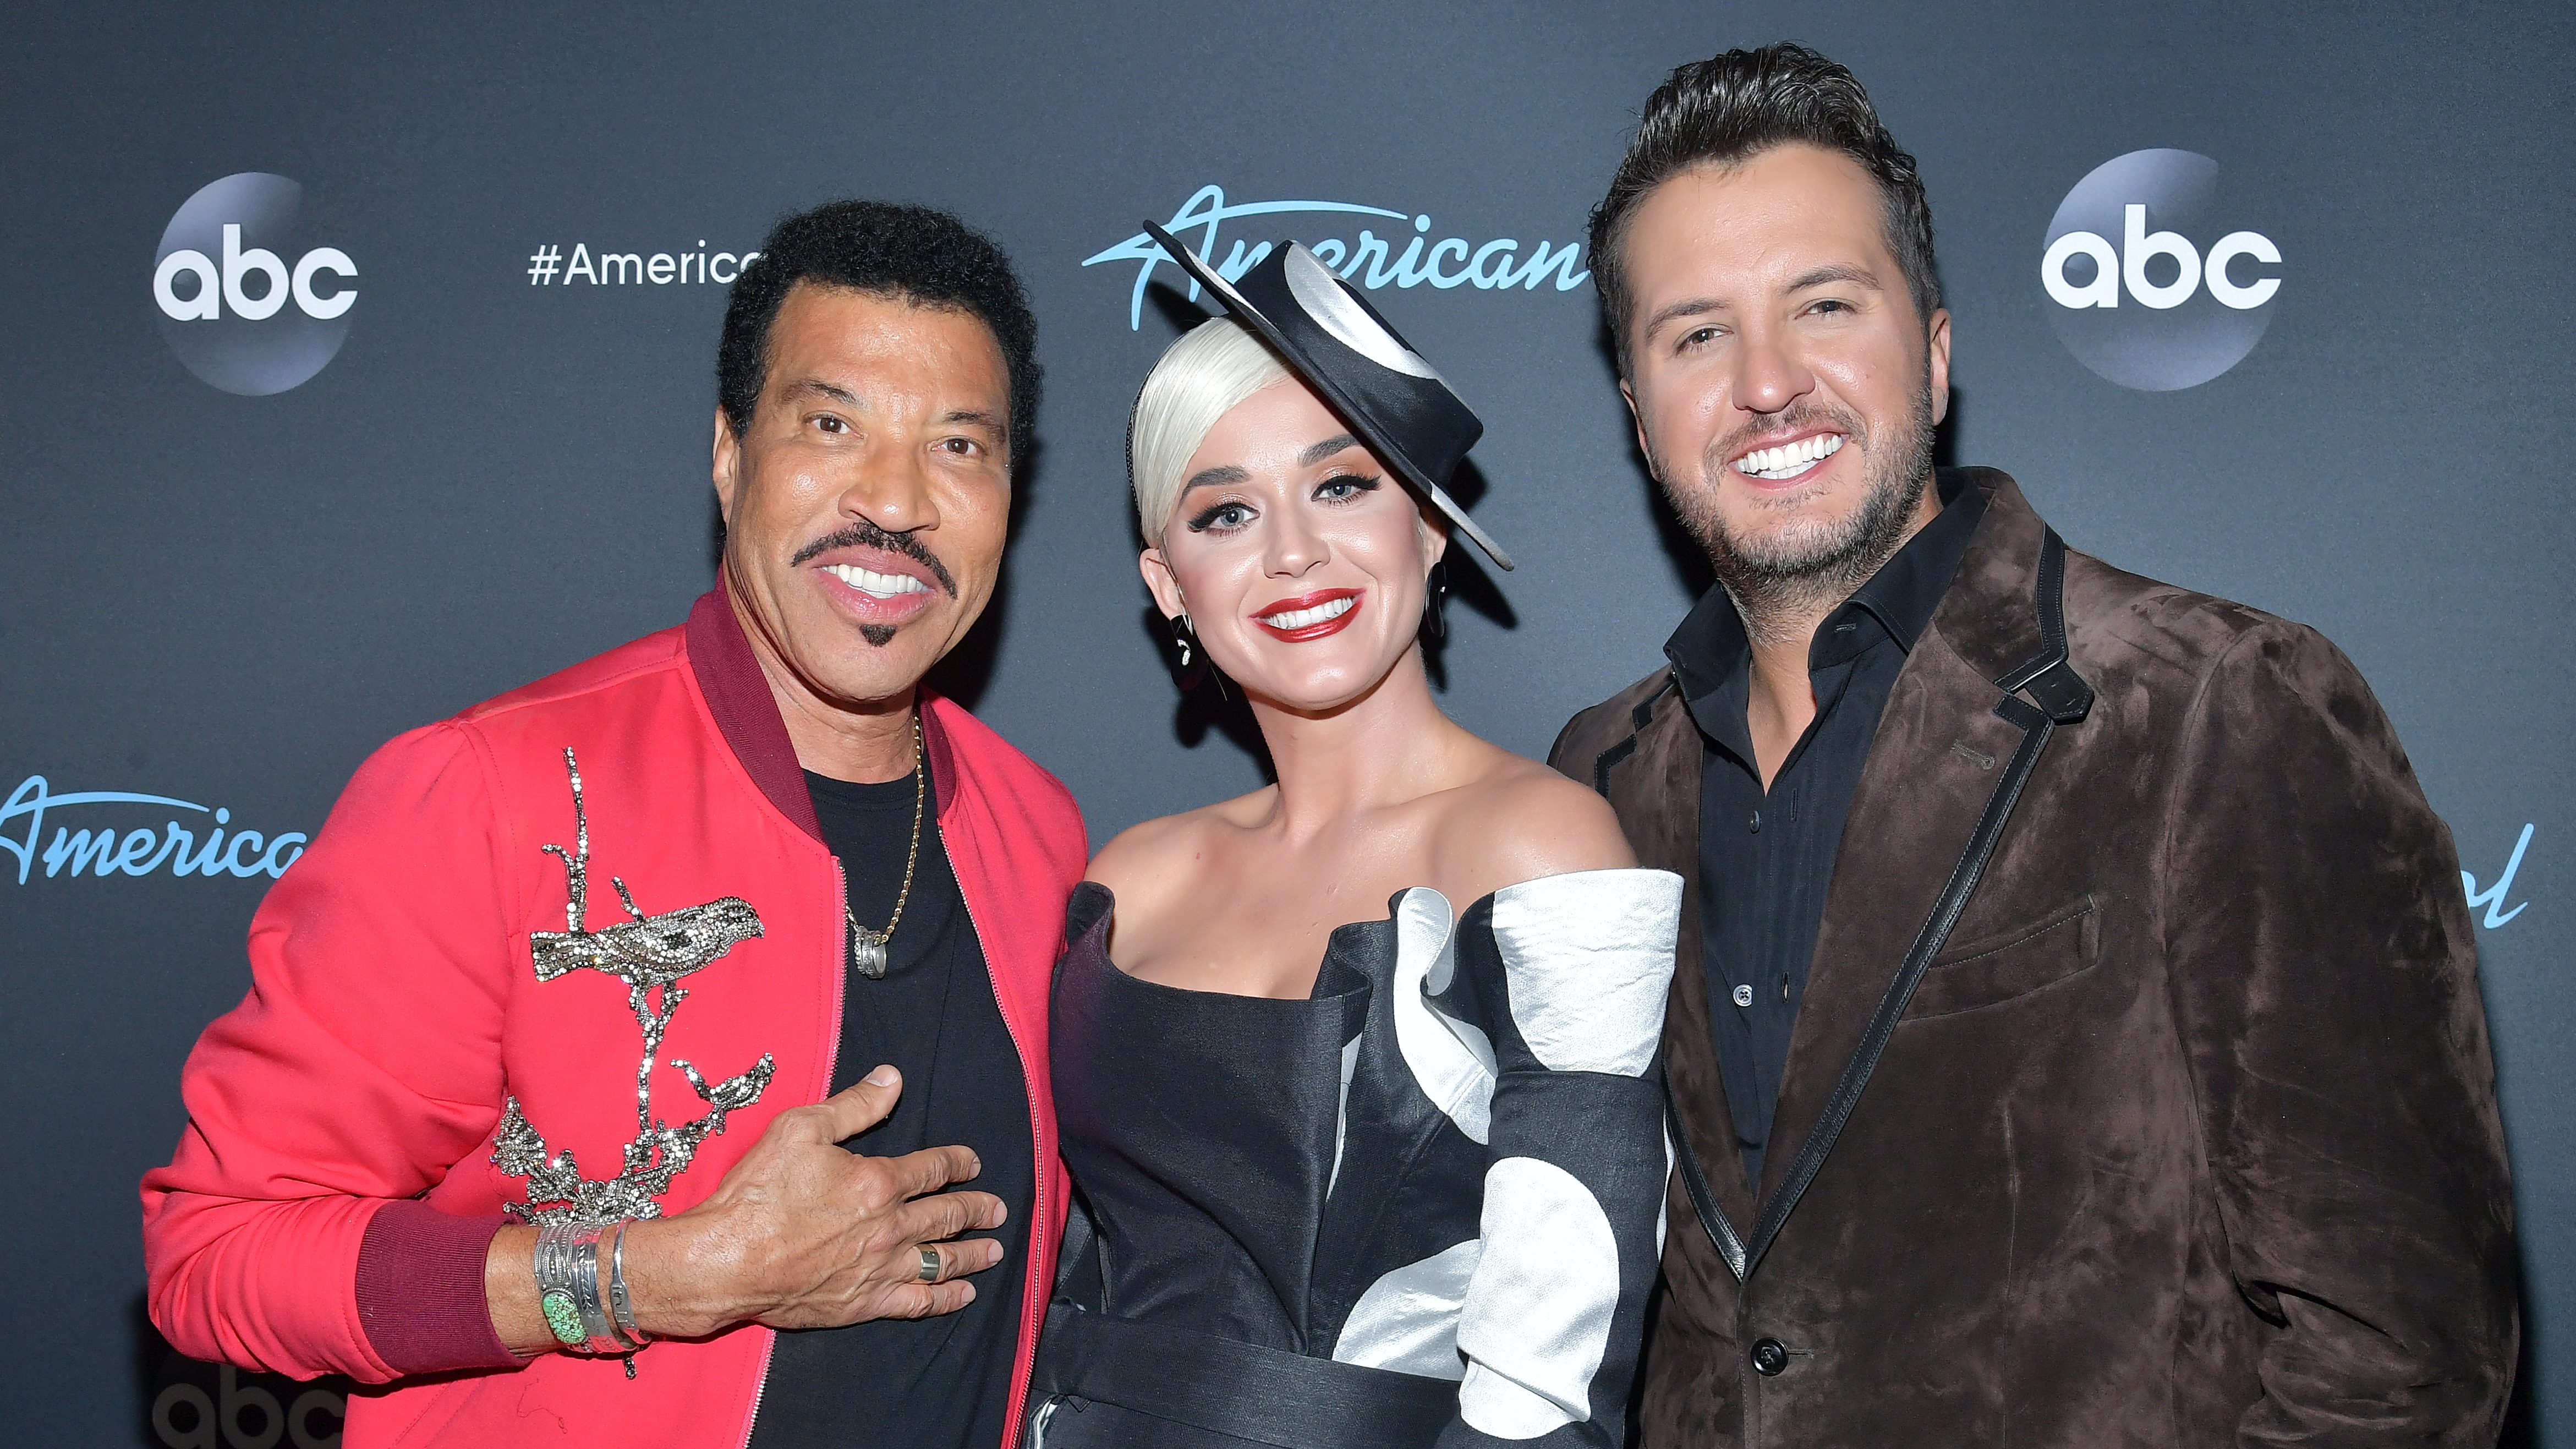 ‘American Idol’ Alums Will Mentor Contestants in 2022 Season